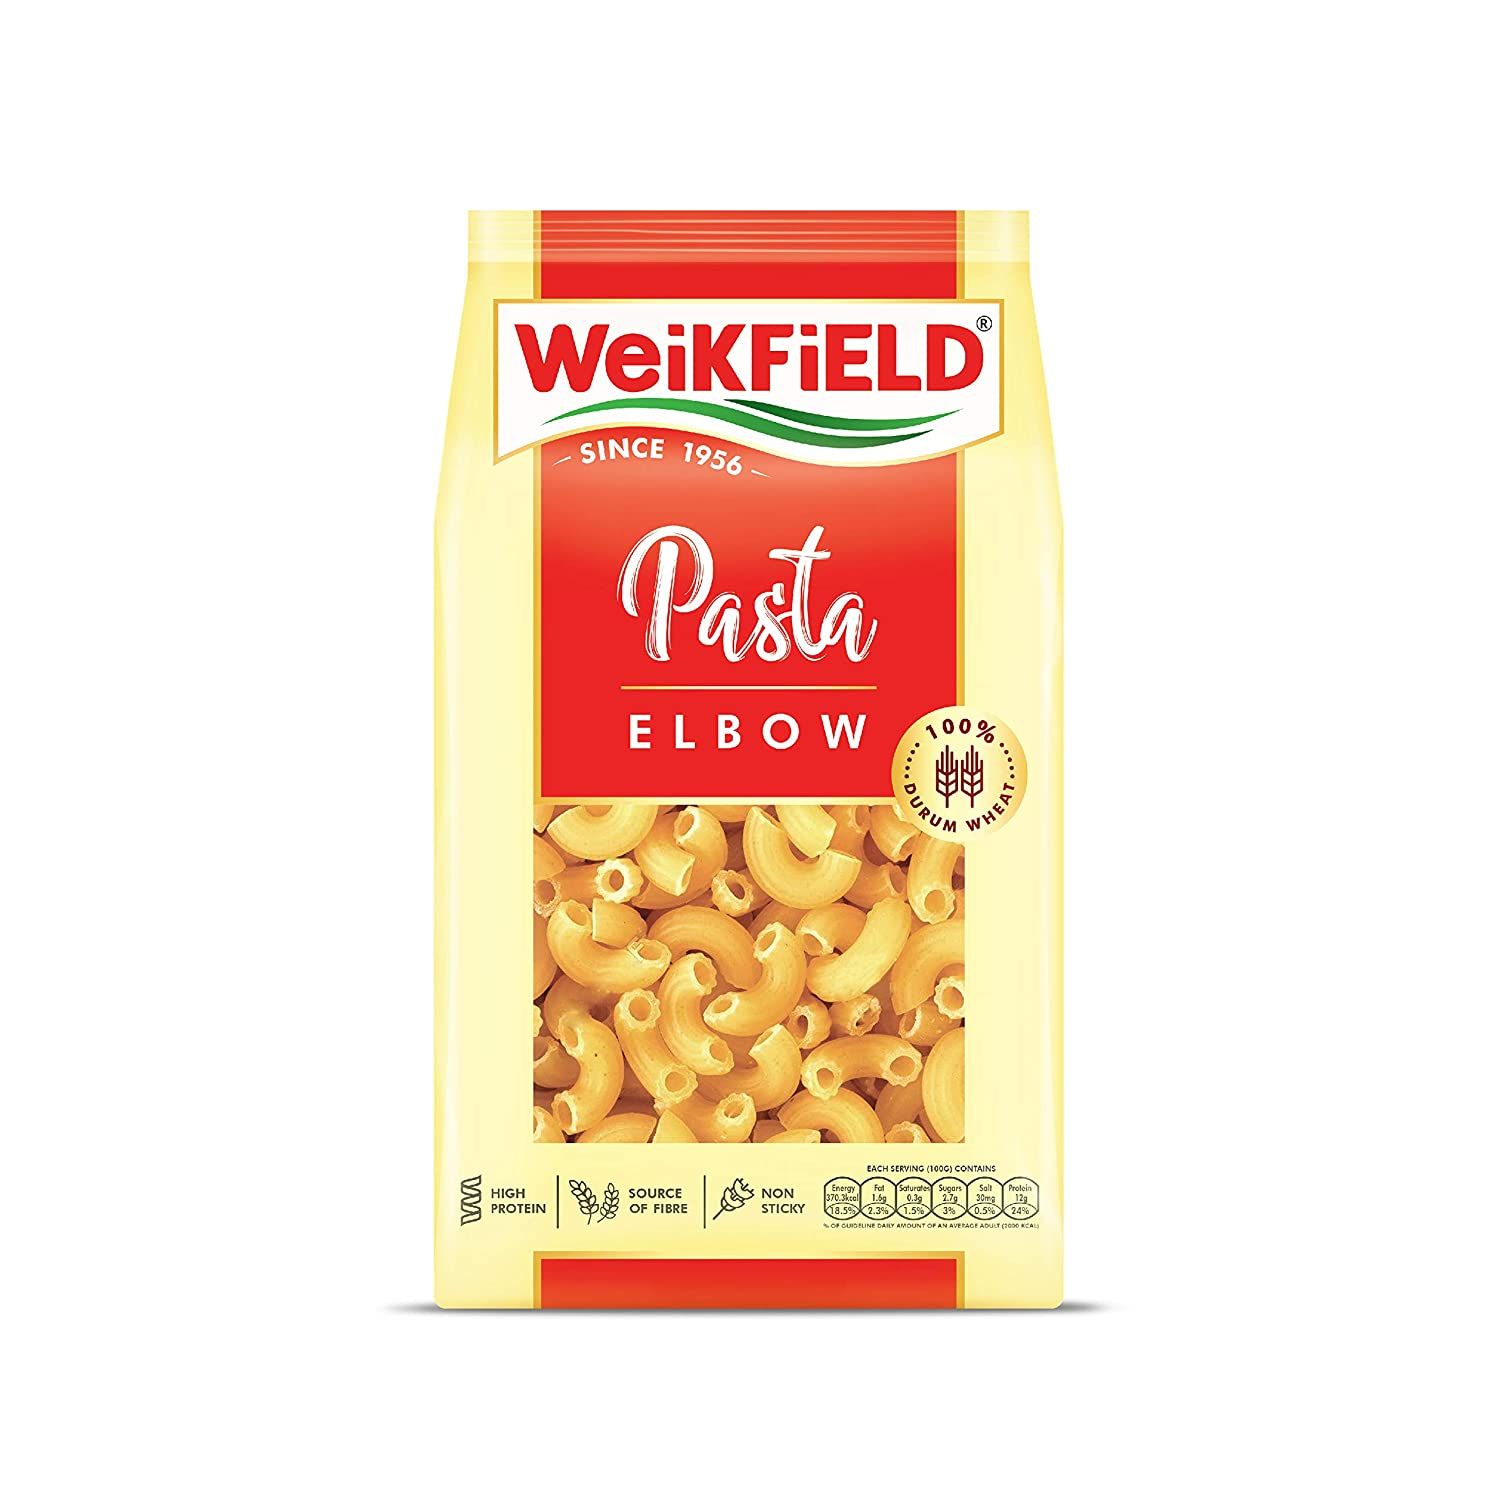 Weikfield Pasta Elbow Image